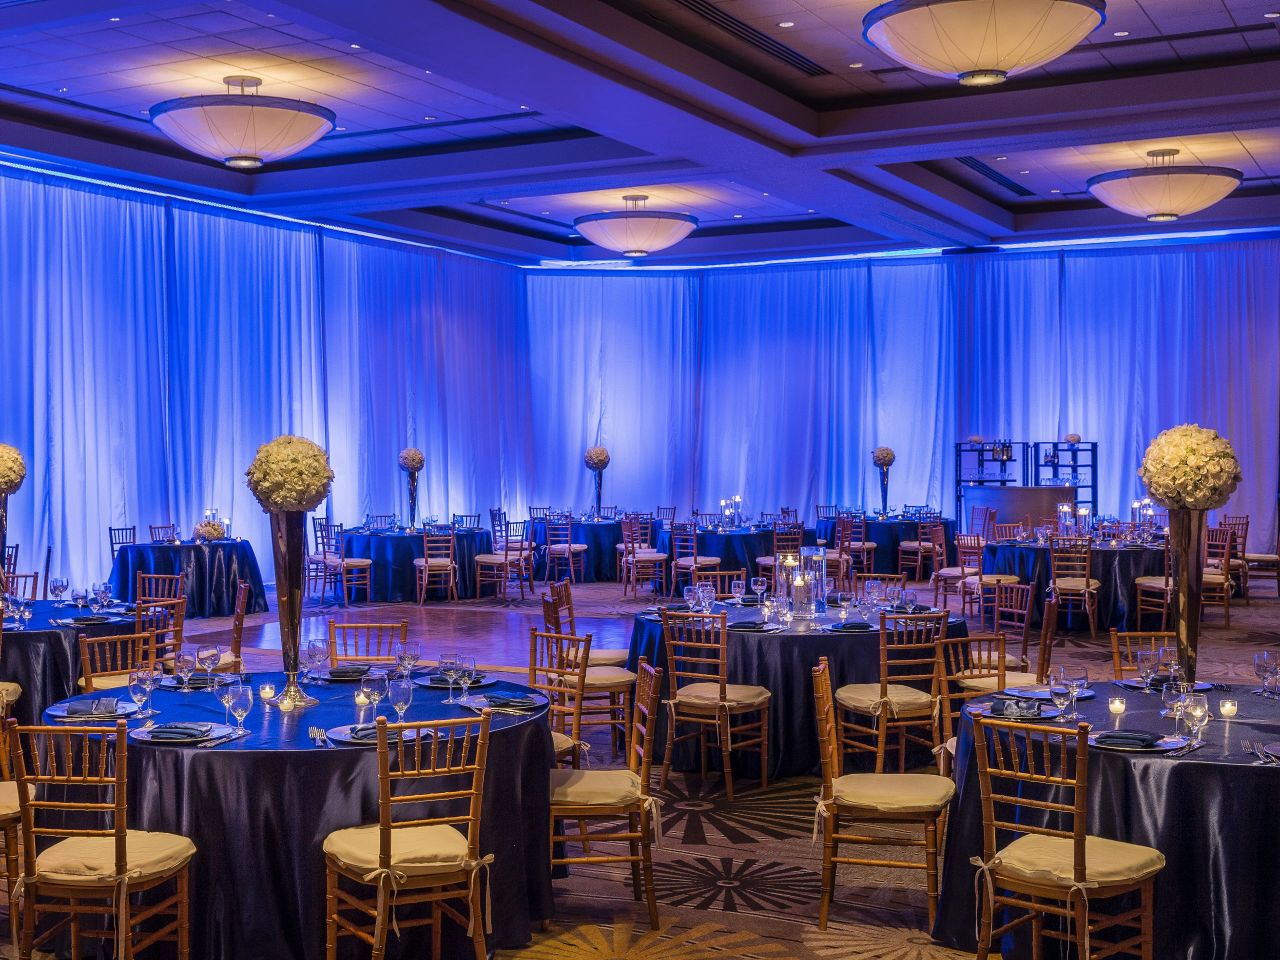 Top Wedding Venues In Sarasota Florida in 2023 The ultimate guide 